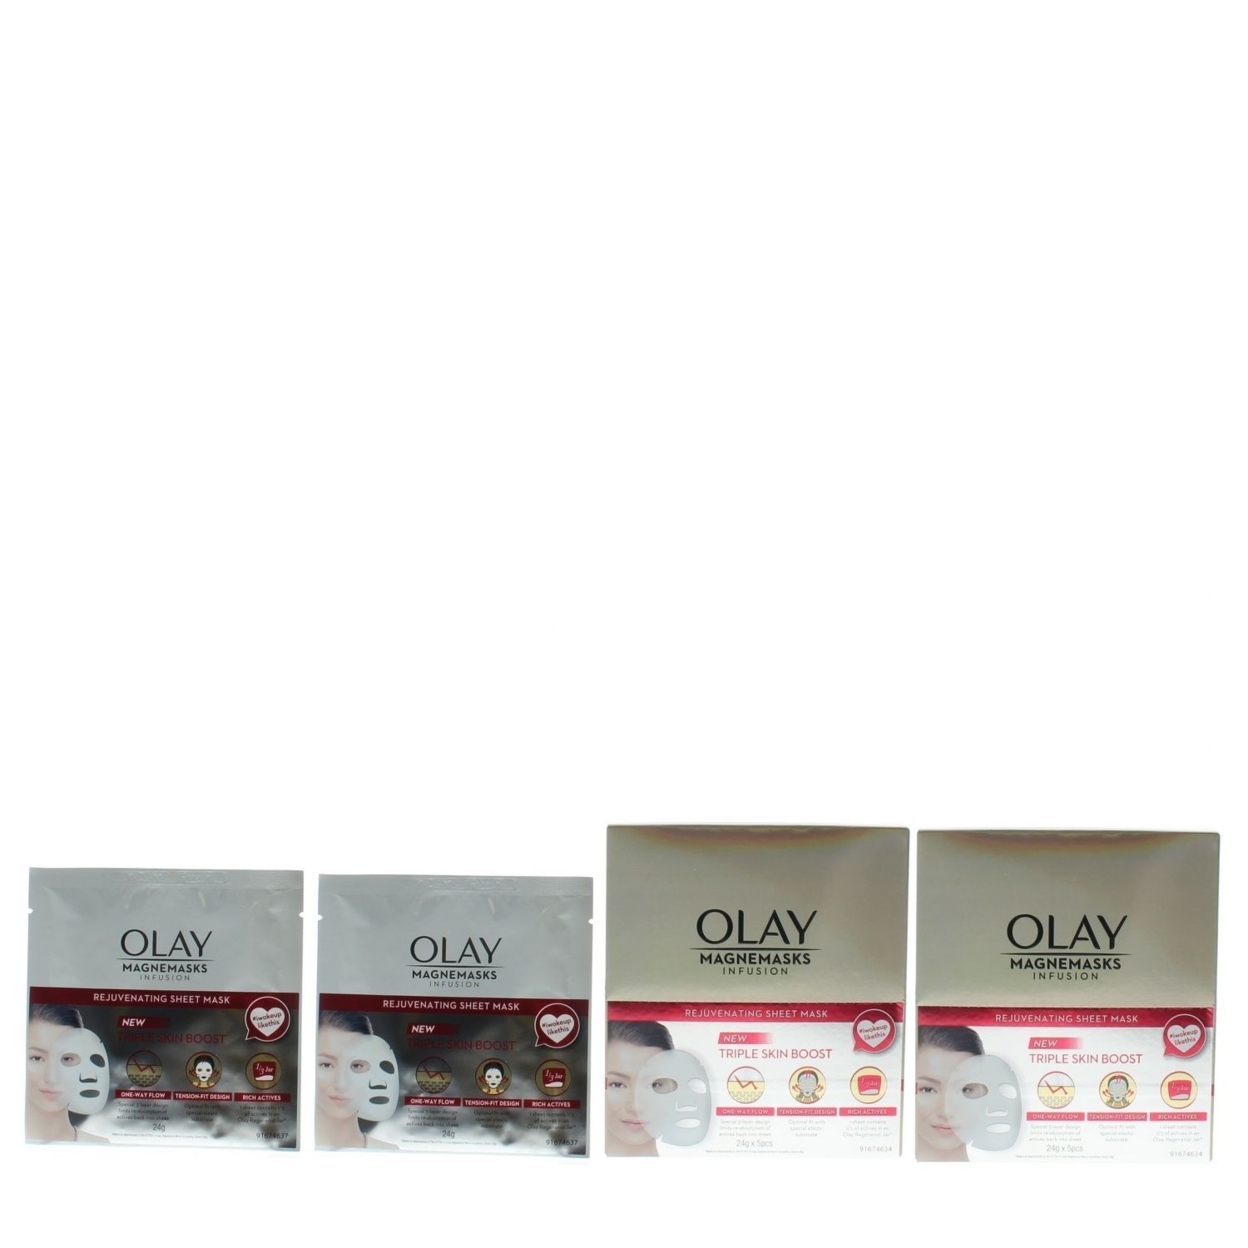 Olay Magnemasks Infusion Rejuvenating Sheet Mask - New Triple Skin Boost 5pcs X 24g (2 Pack)